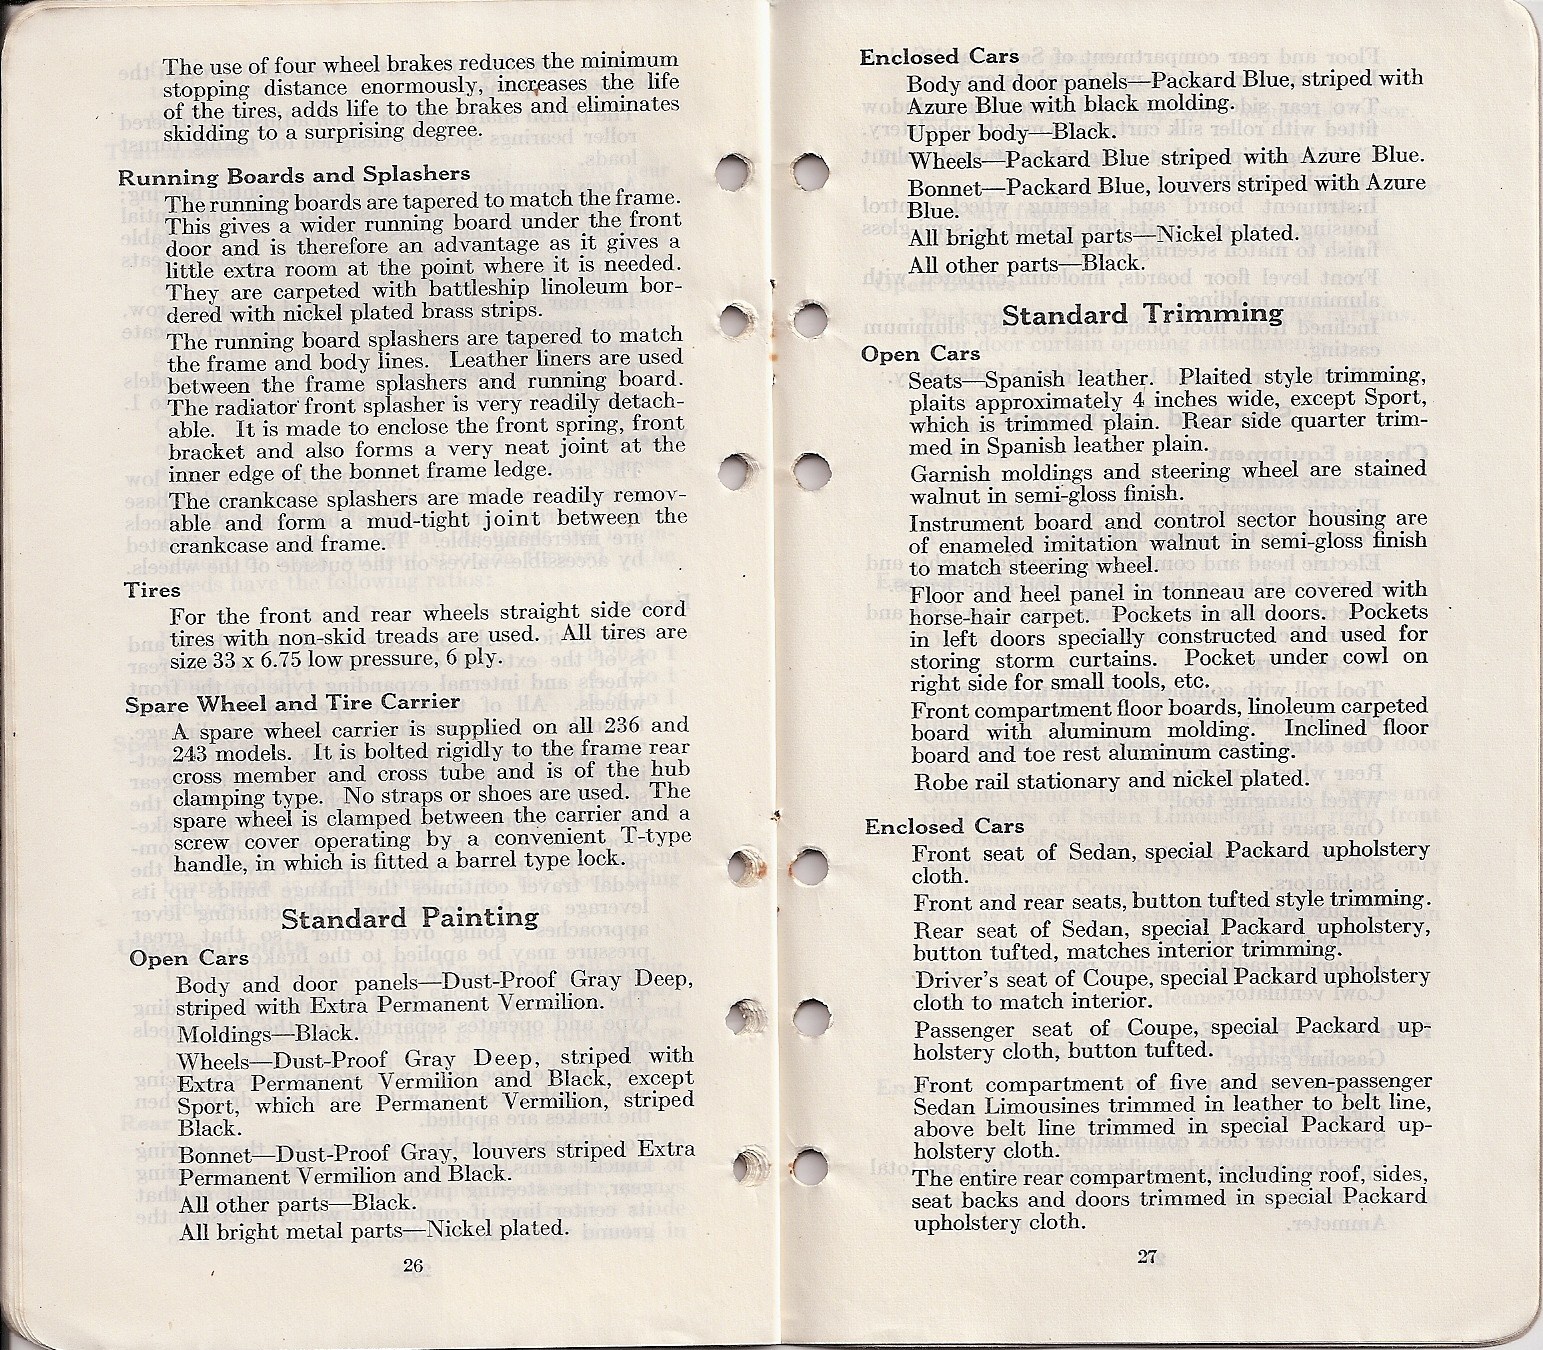 n_1925 Packard Eight Facts Book-26-27.jpg